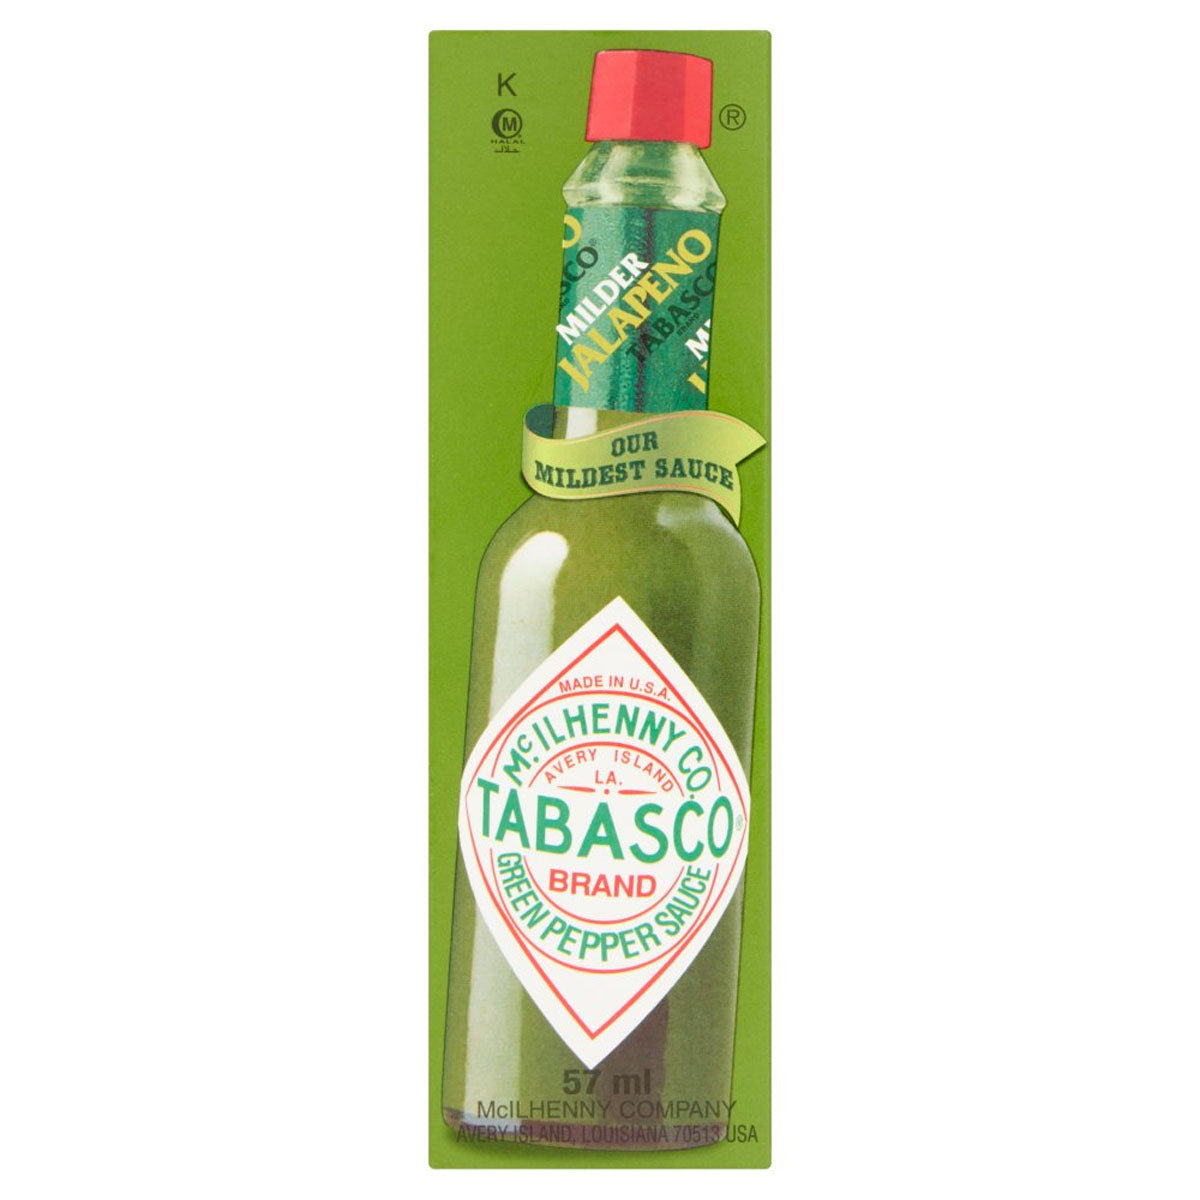 A bottle of Tabasco - Mild Green Hot Pepper Sauce - 57ml on a white background.